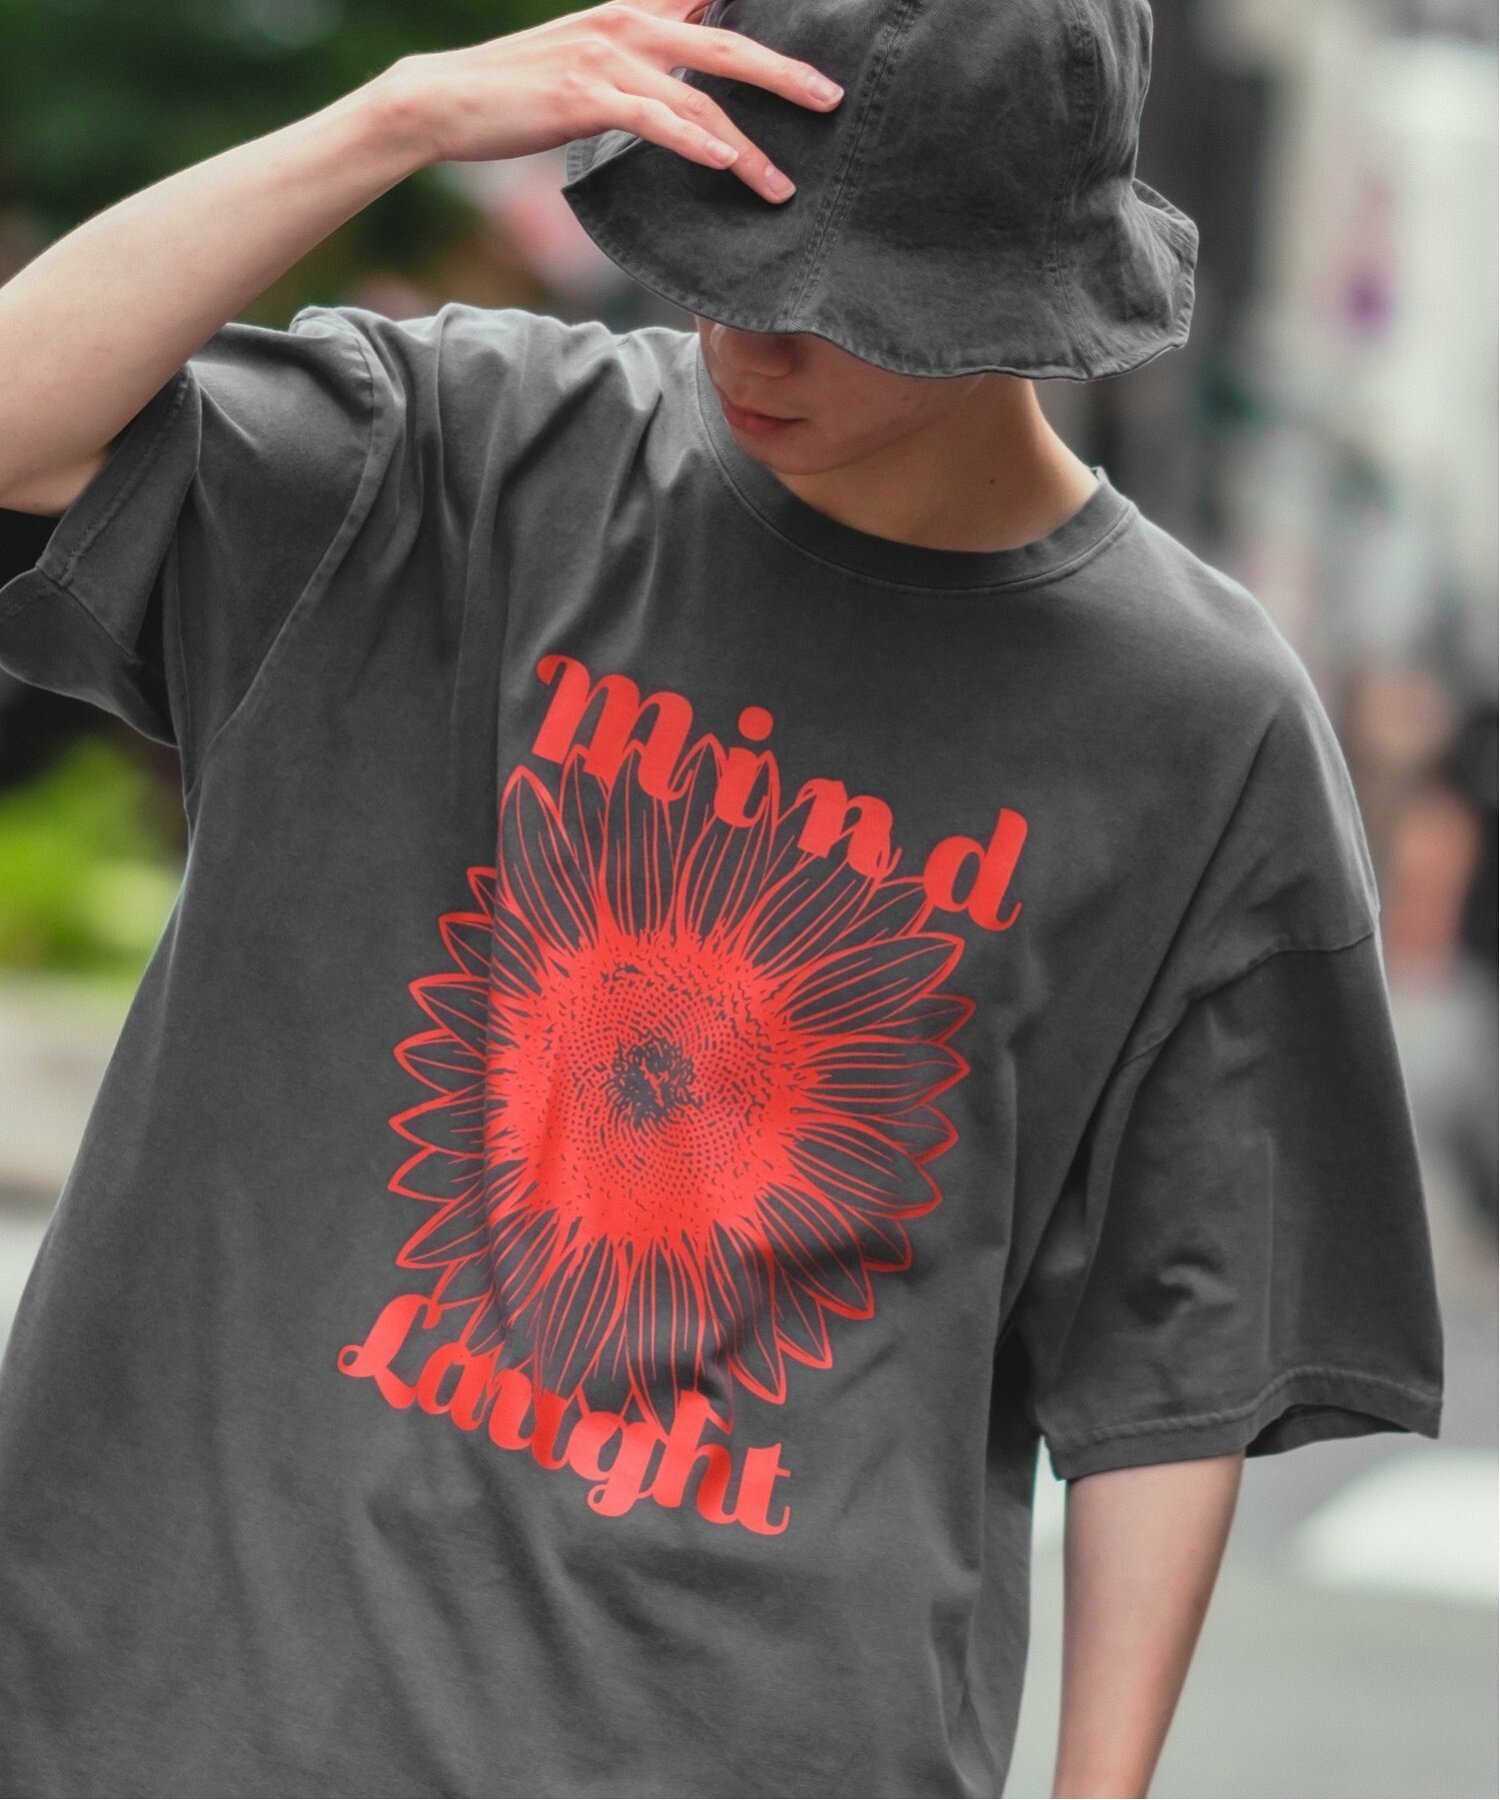 UAU ワオ ピグメント加工 Mind Laught フラワー ロゴ プリント 半袖Tシャツ